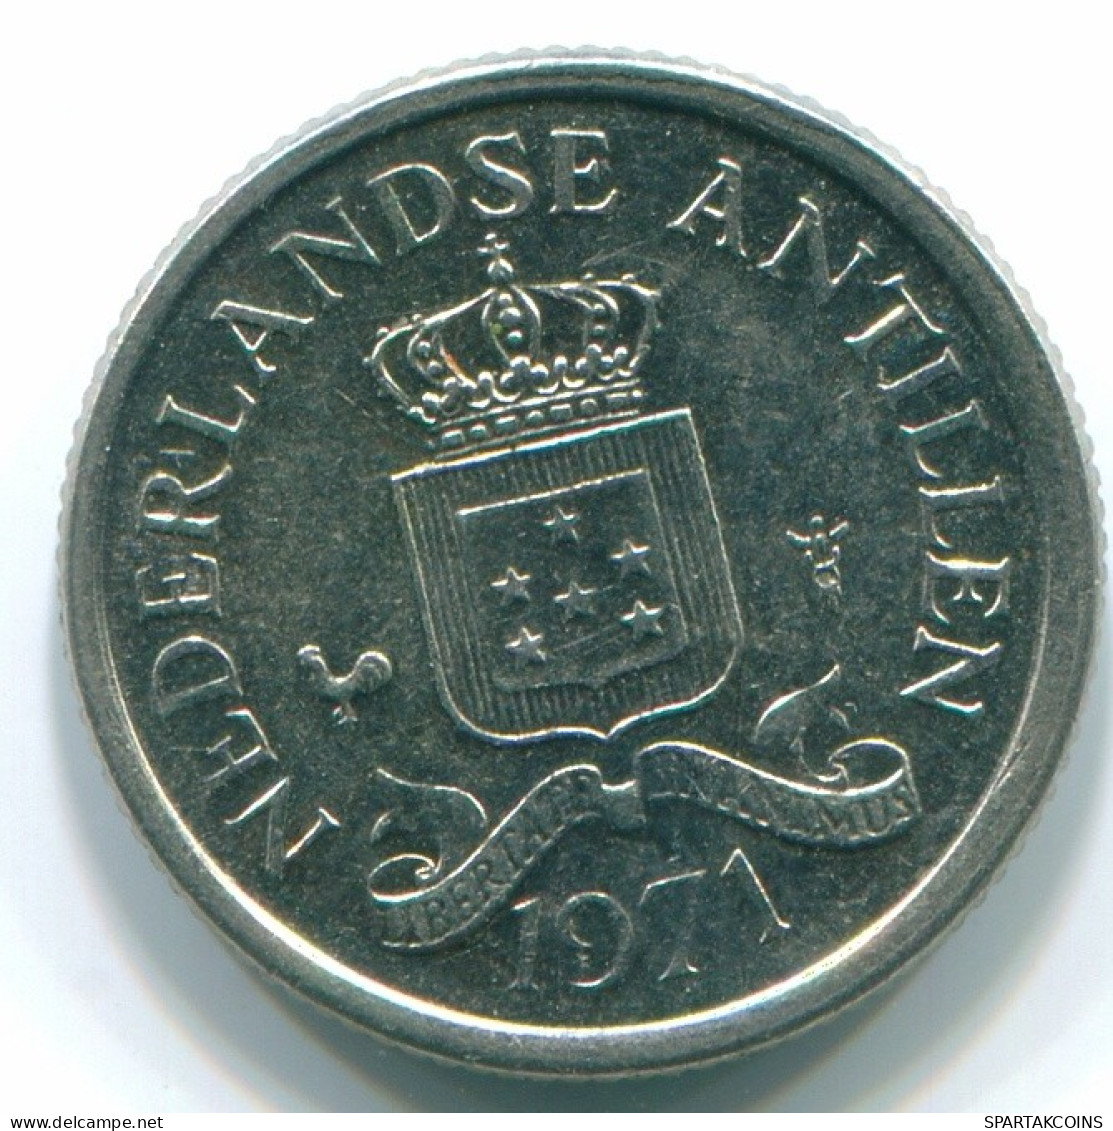 10 CENTS 1971 NETHERLANDS ANTILLES Nickel Colonial Coin #S13411.U.A - Nederlandse Antillen